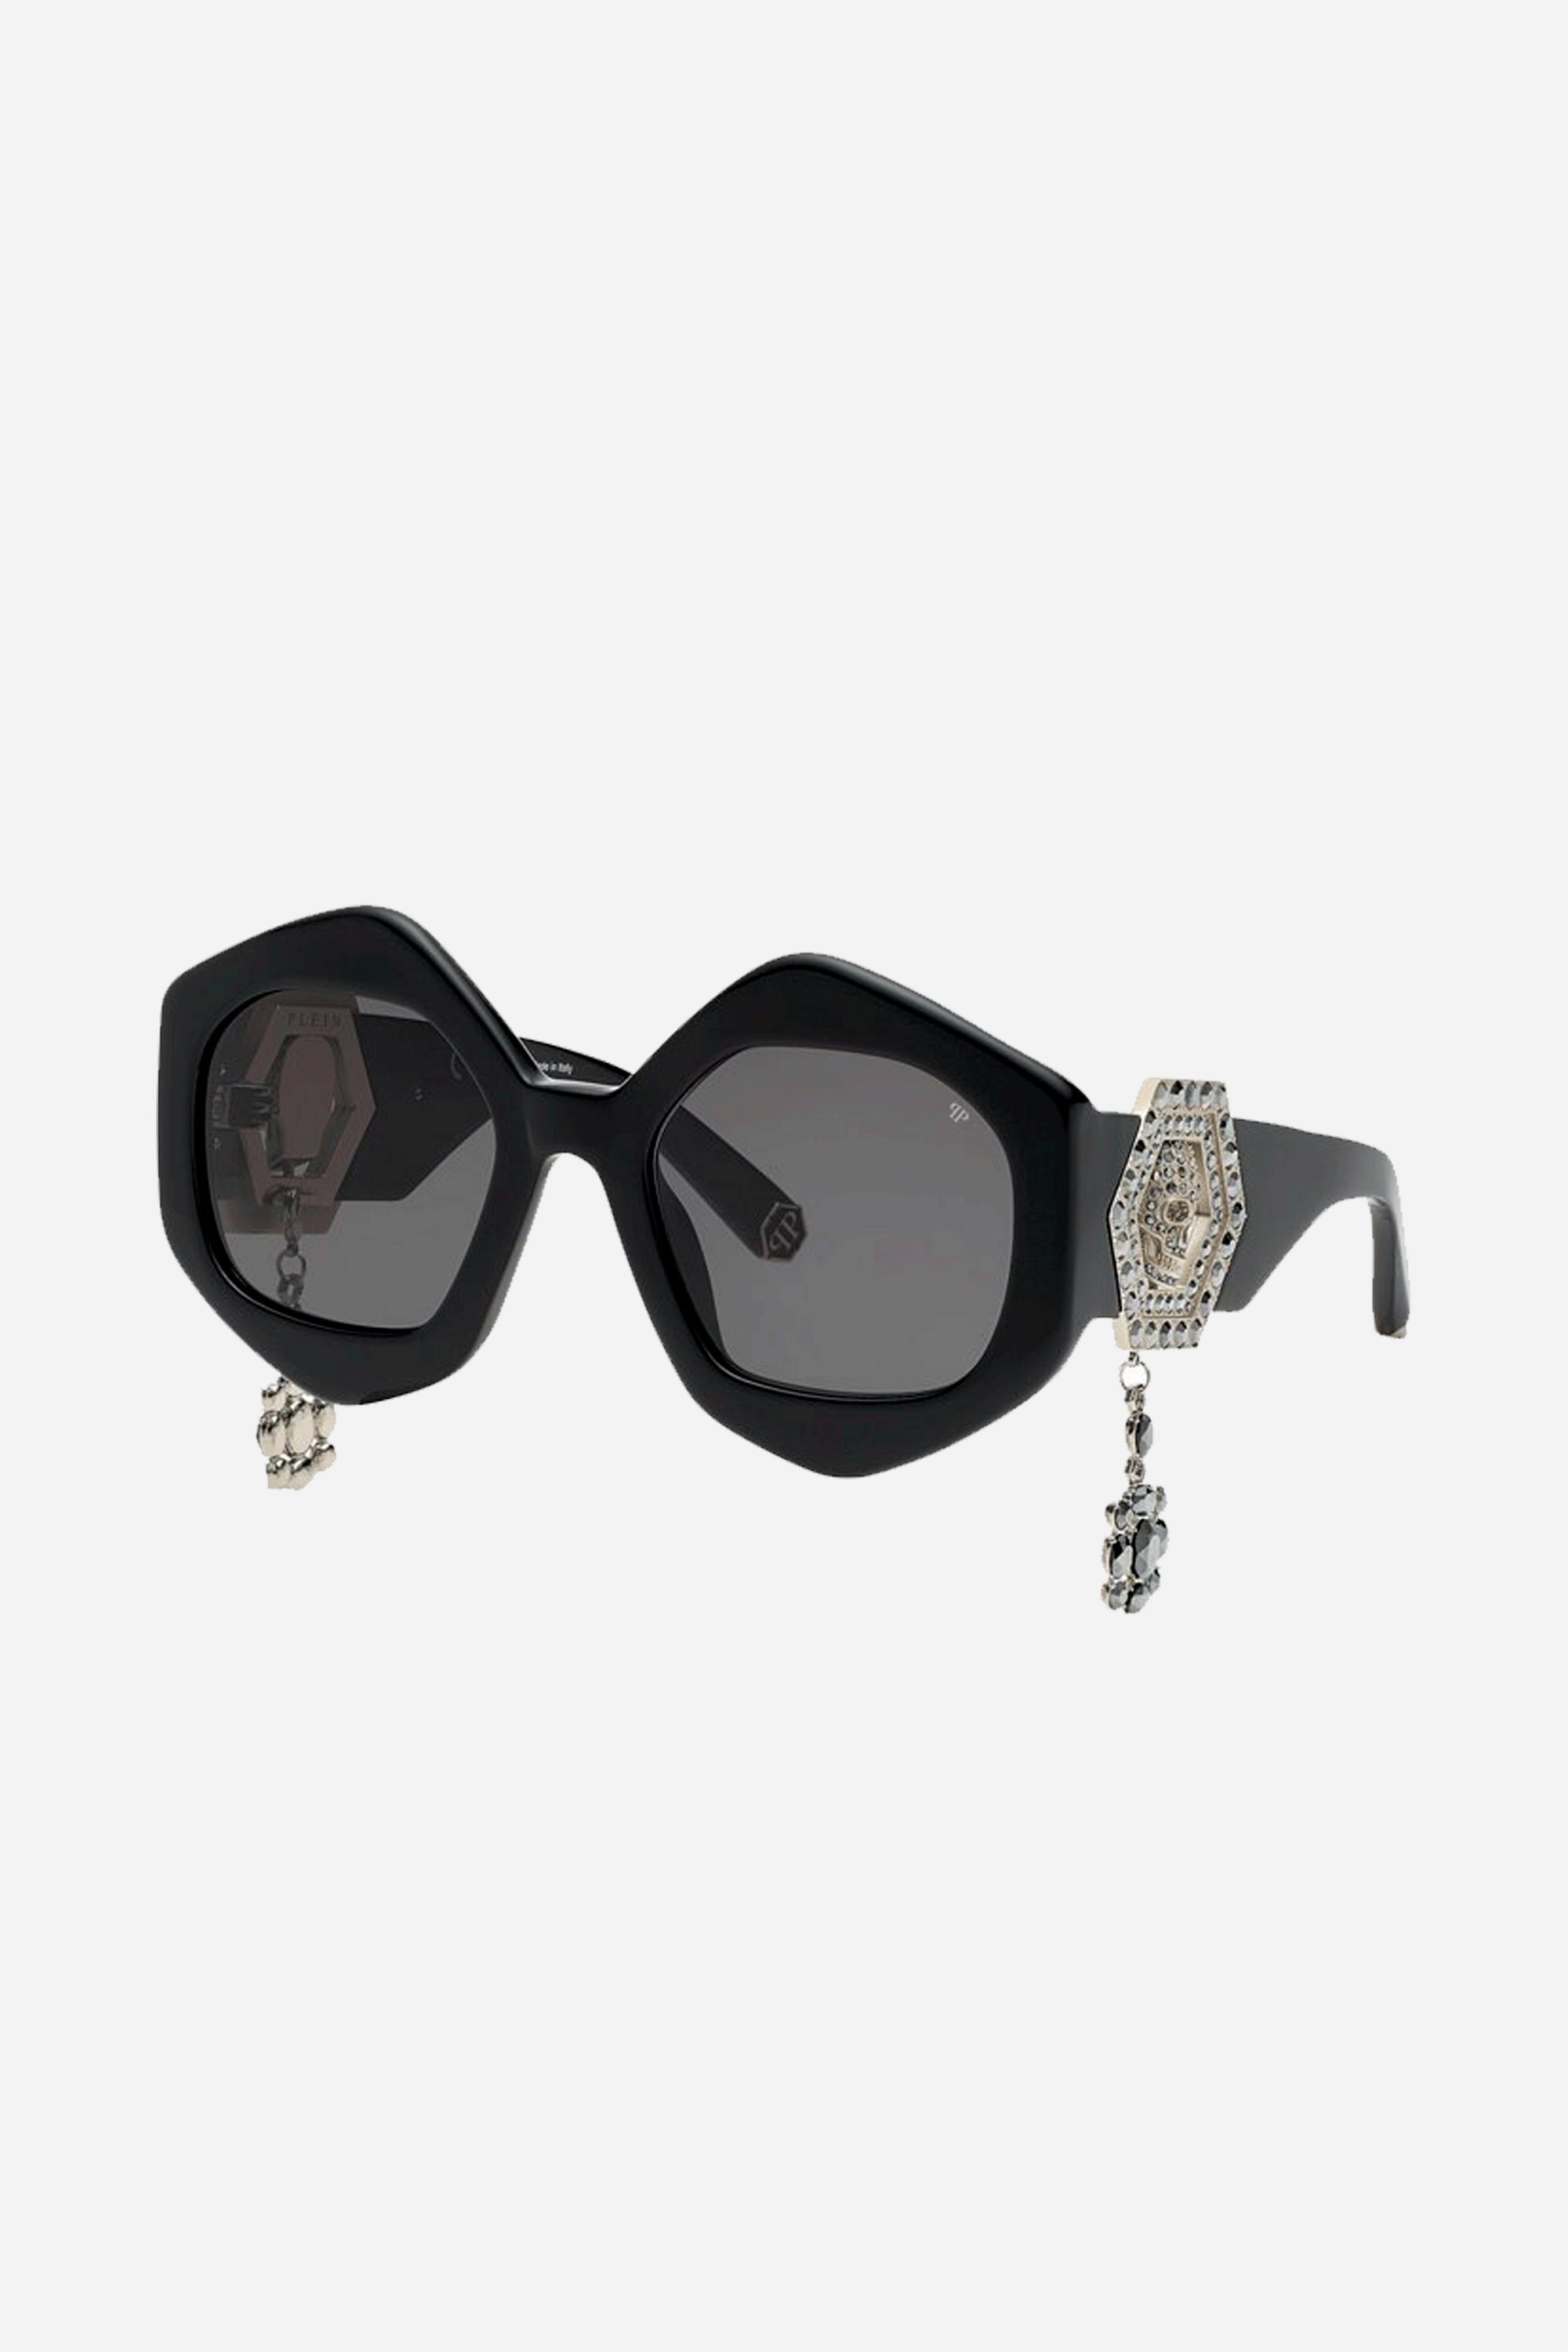 Philipp Plein oversized black sunglasses - Eyewear Club